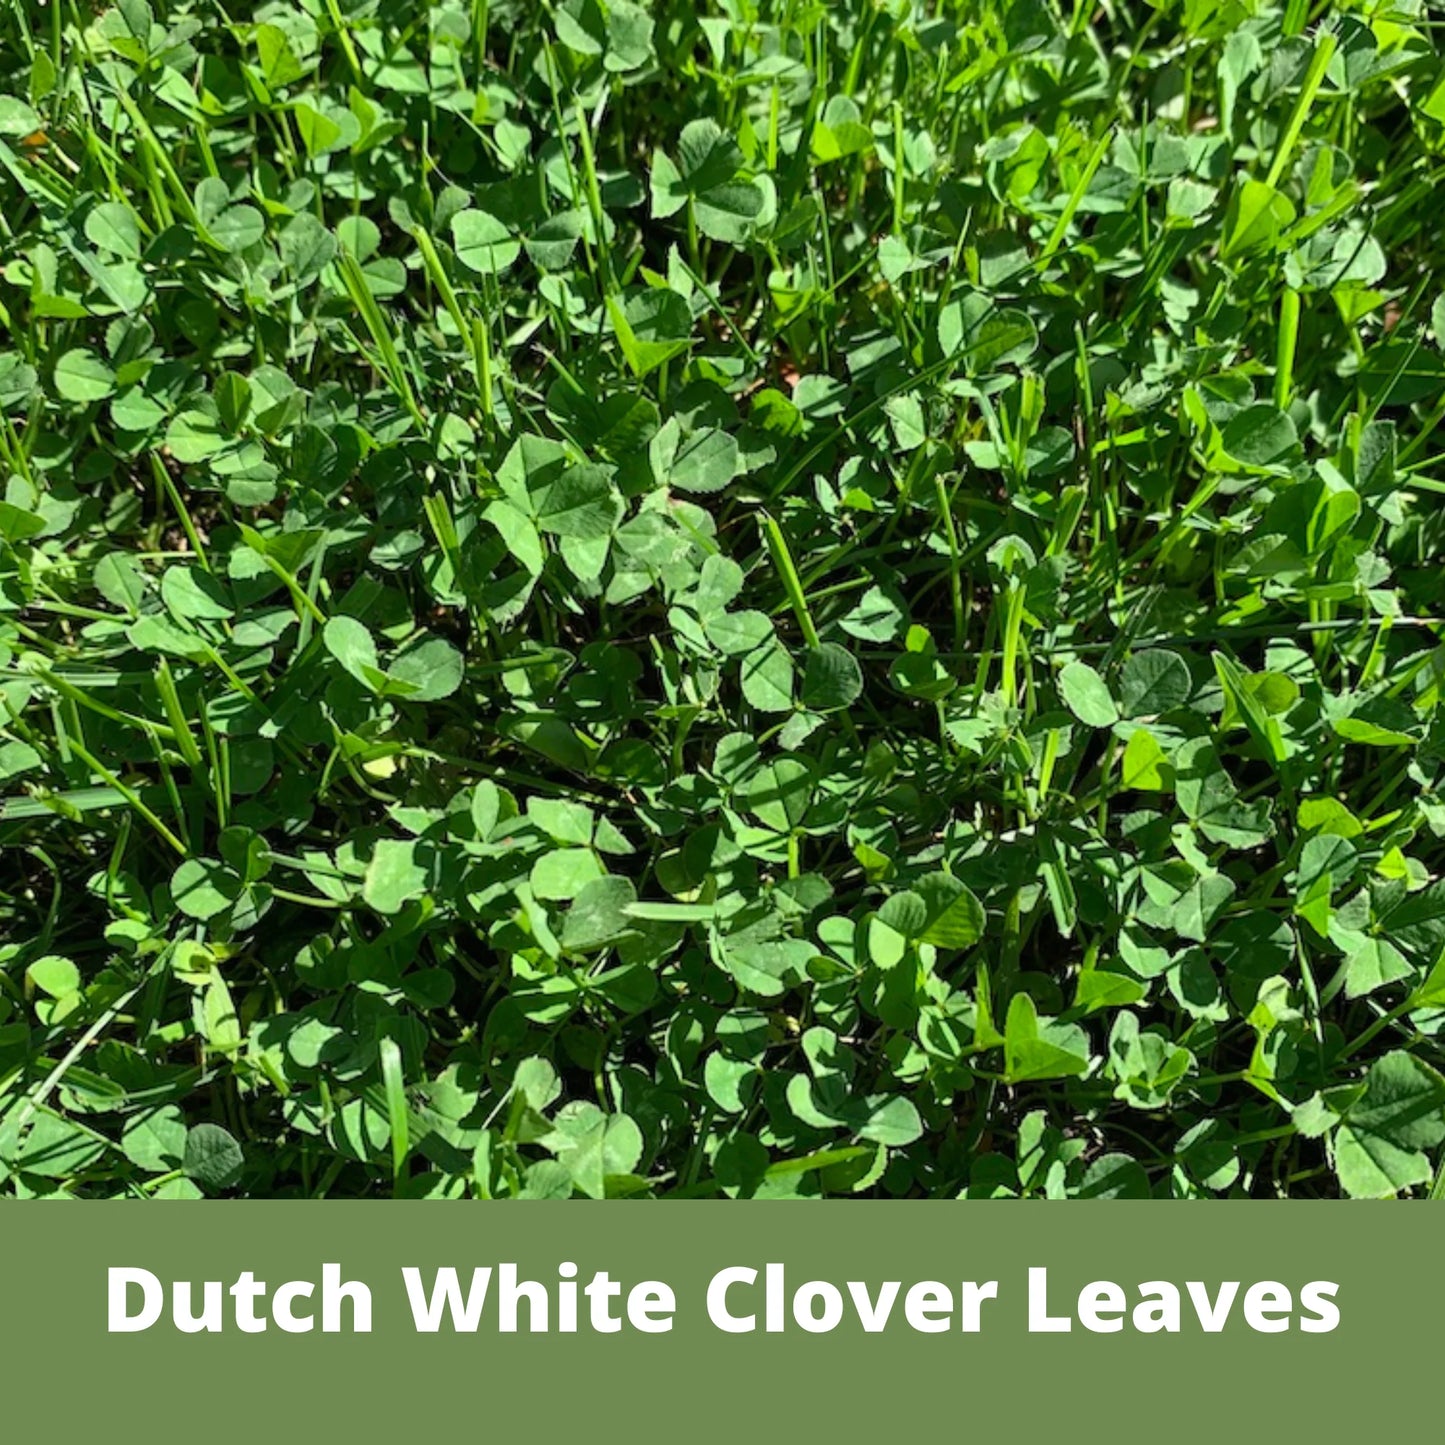 Dutch White Clover Seed Pouch